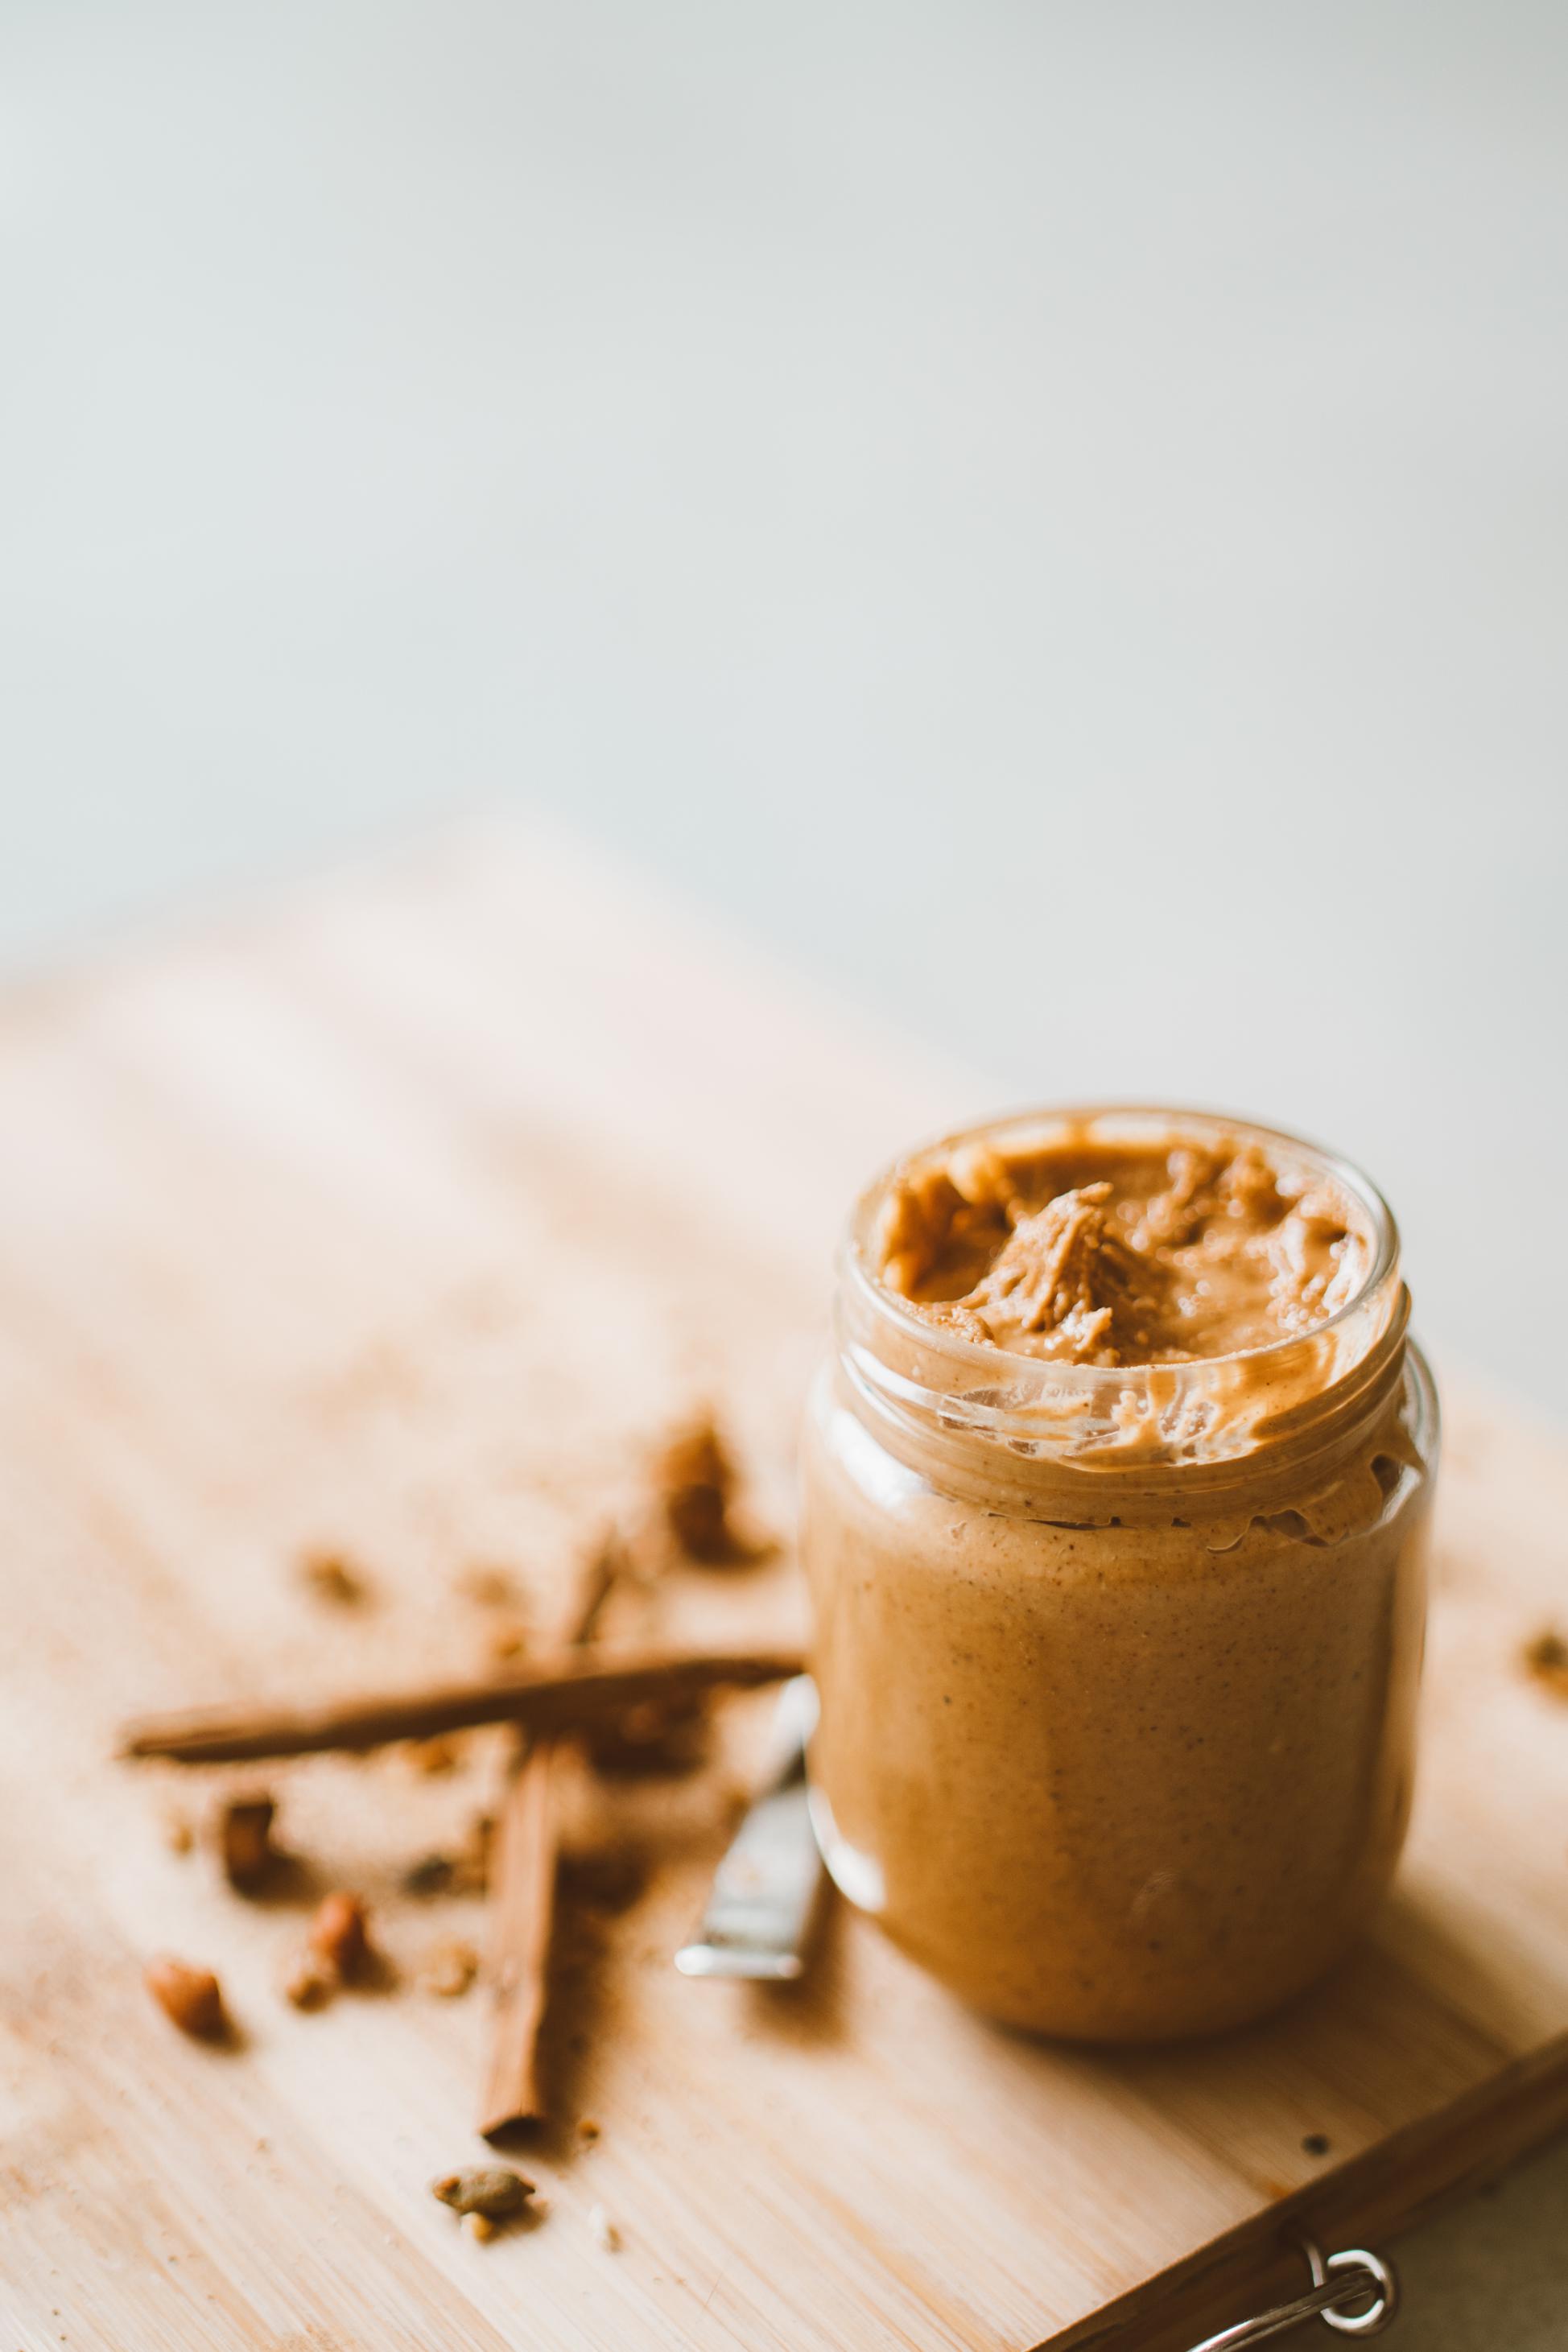 Nutritional benefits of peanut butter